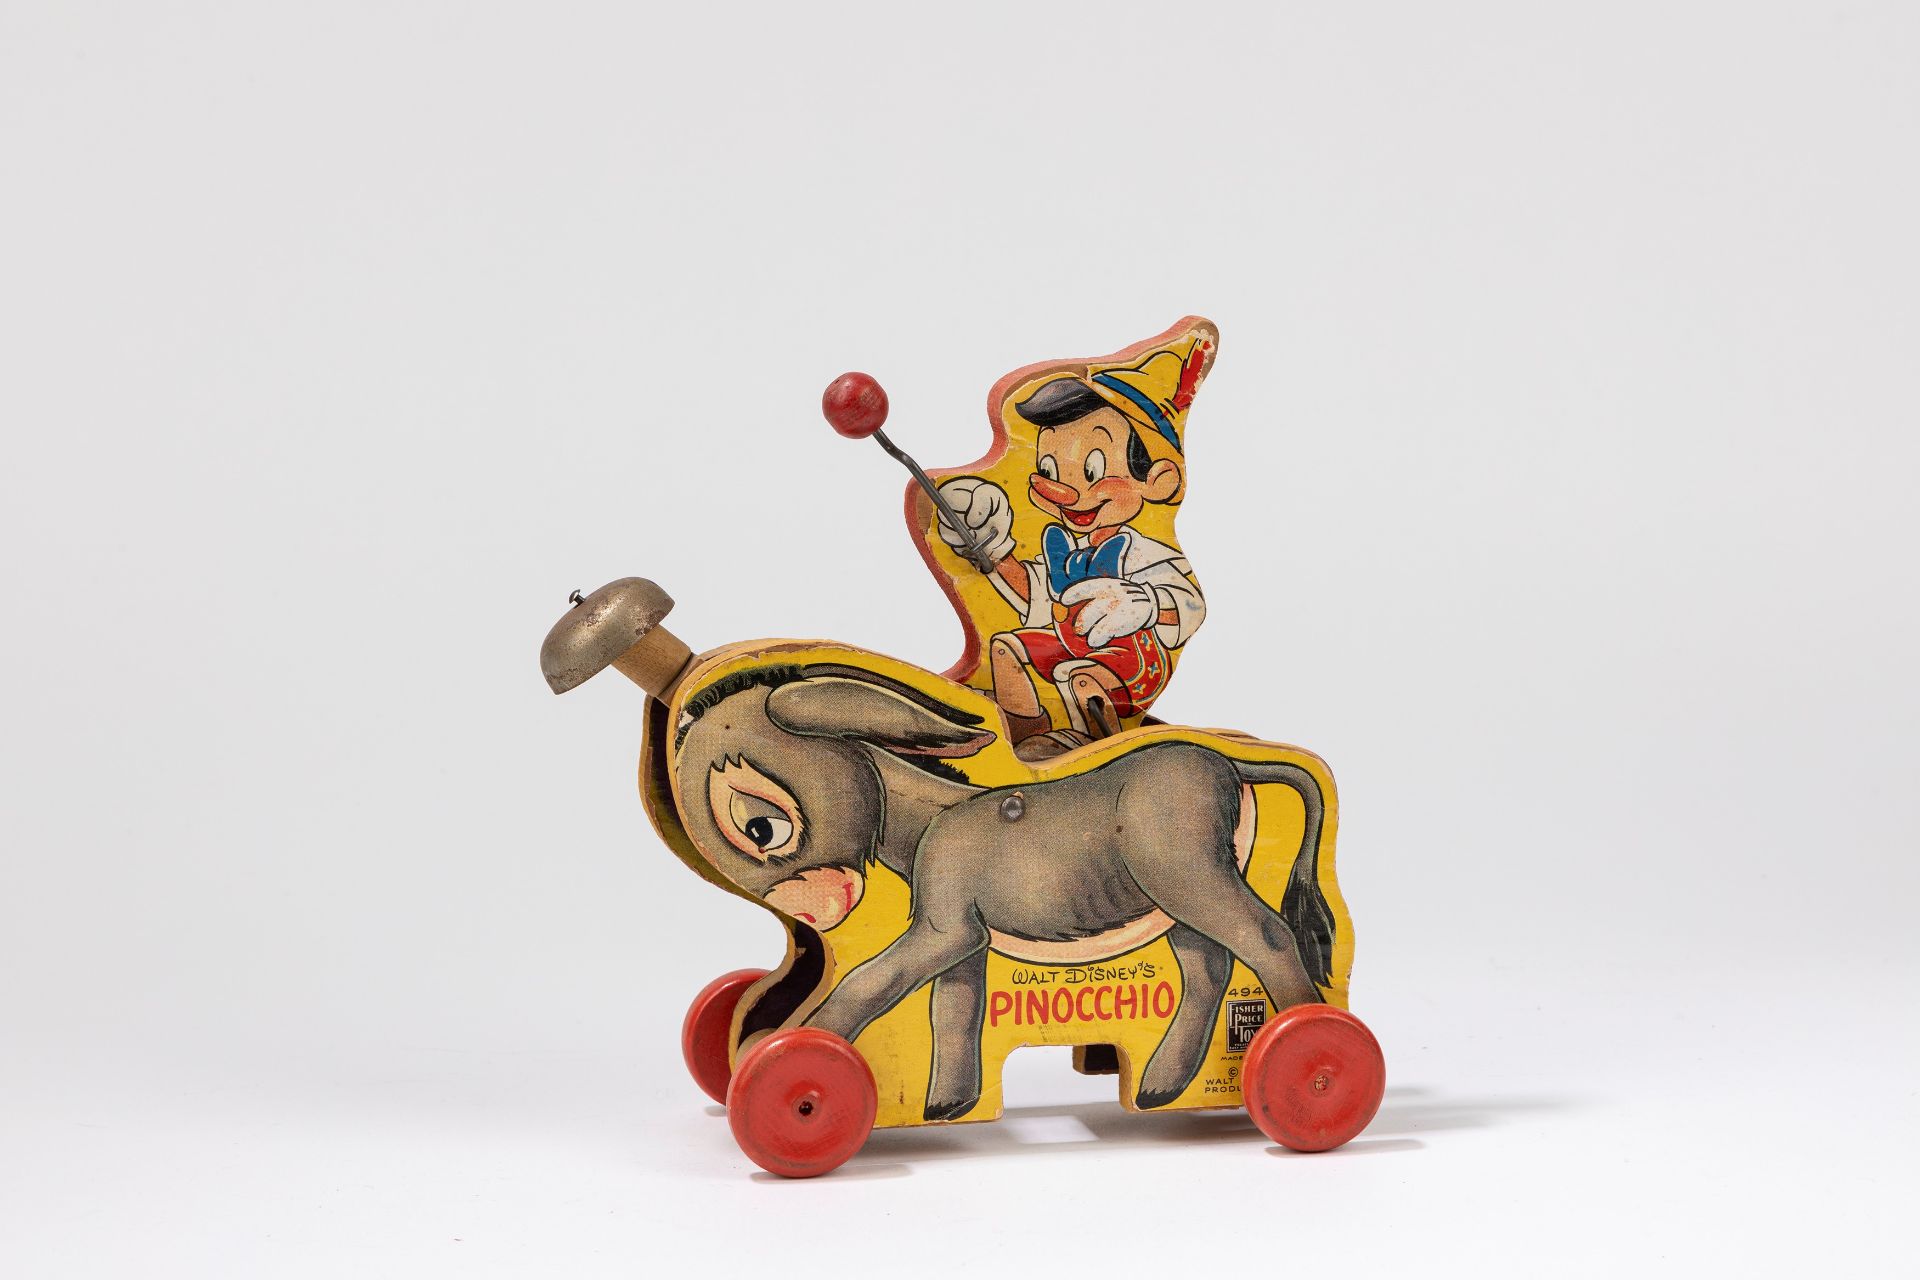 Fisher Price - Pinocchio on donkey, 1940-1950